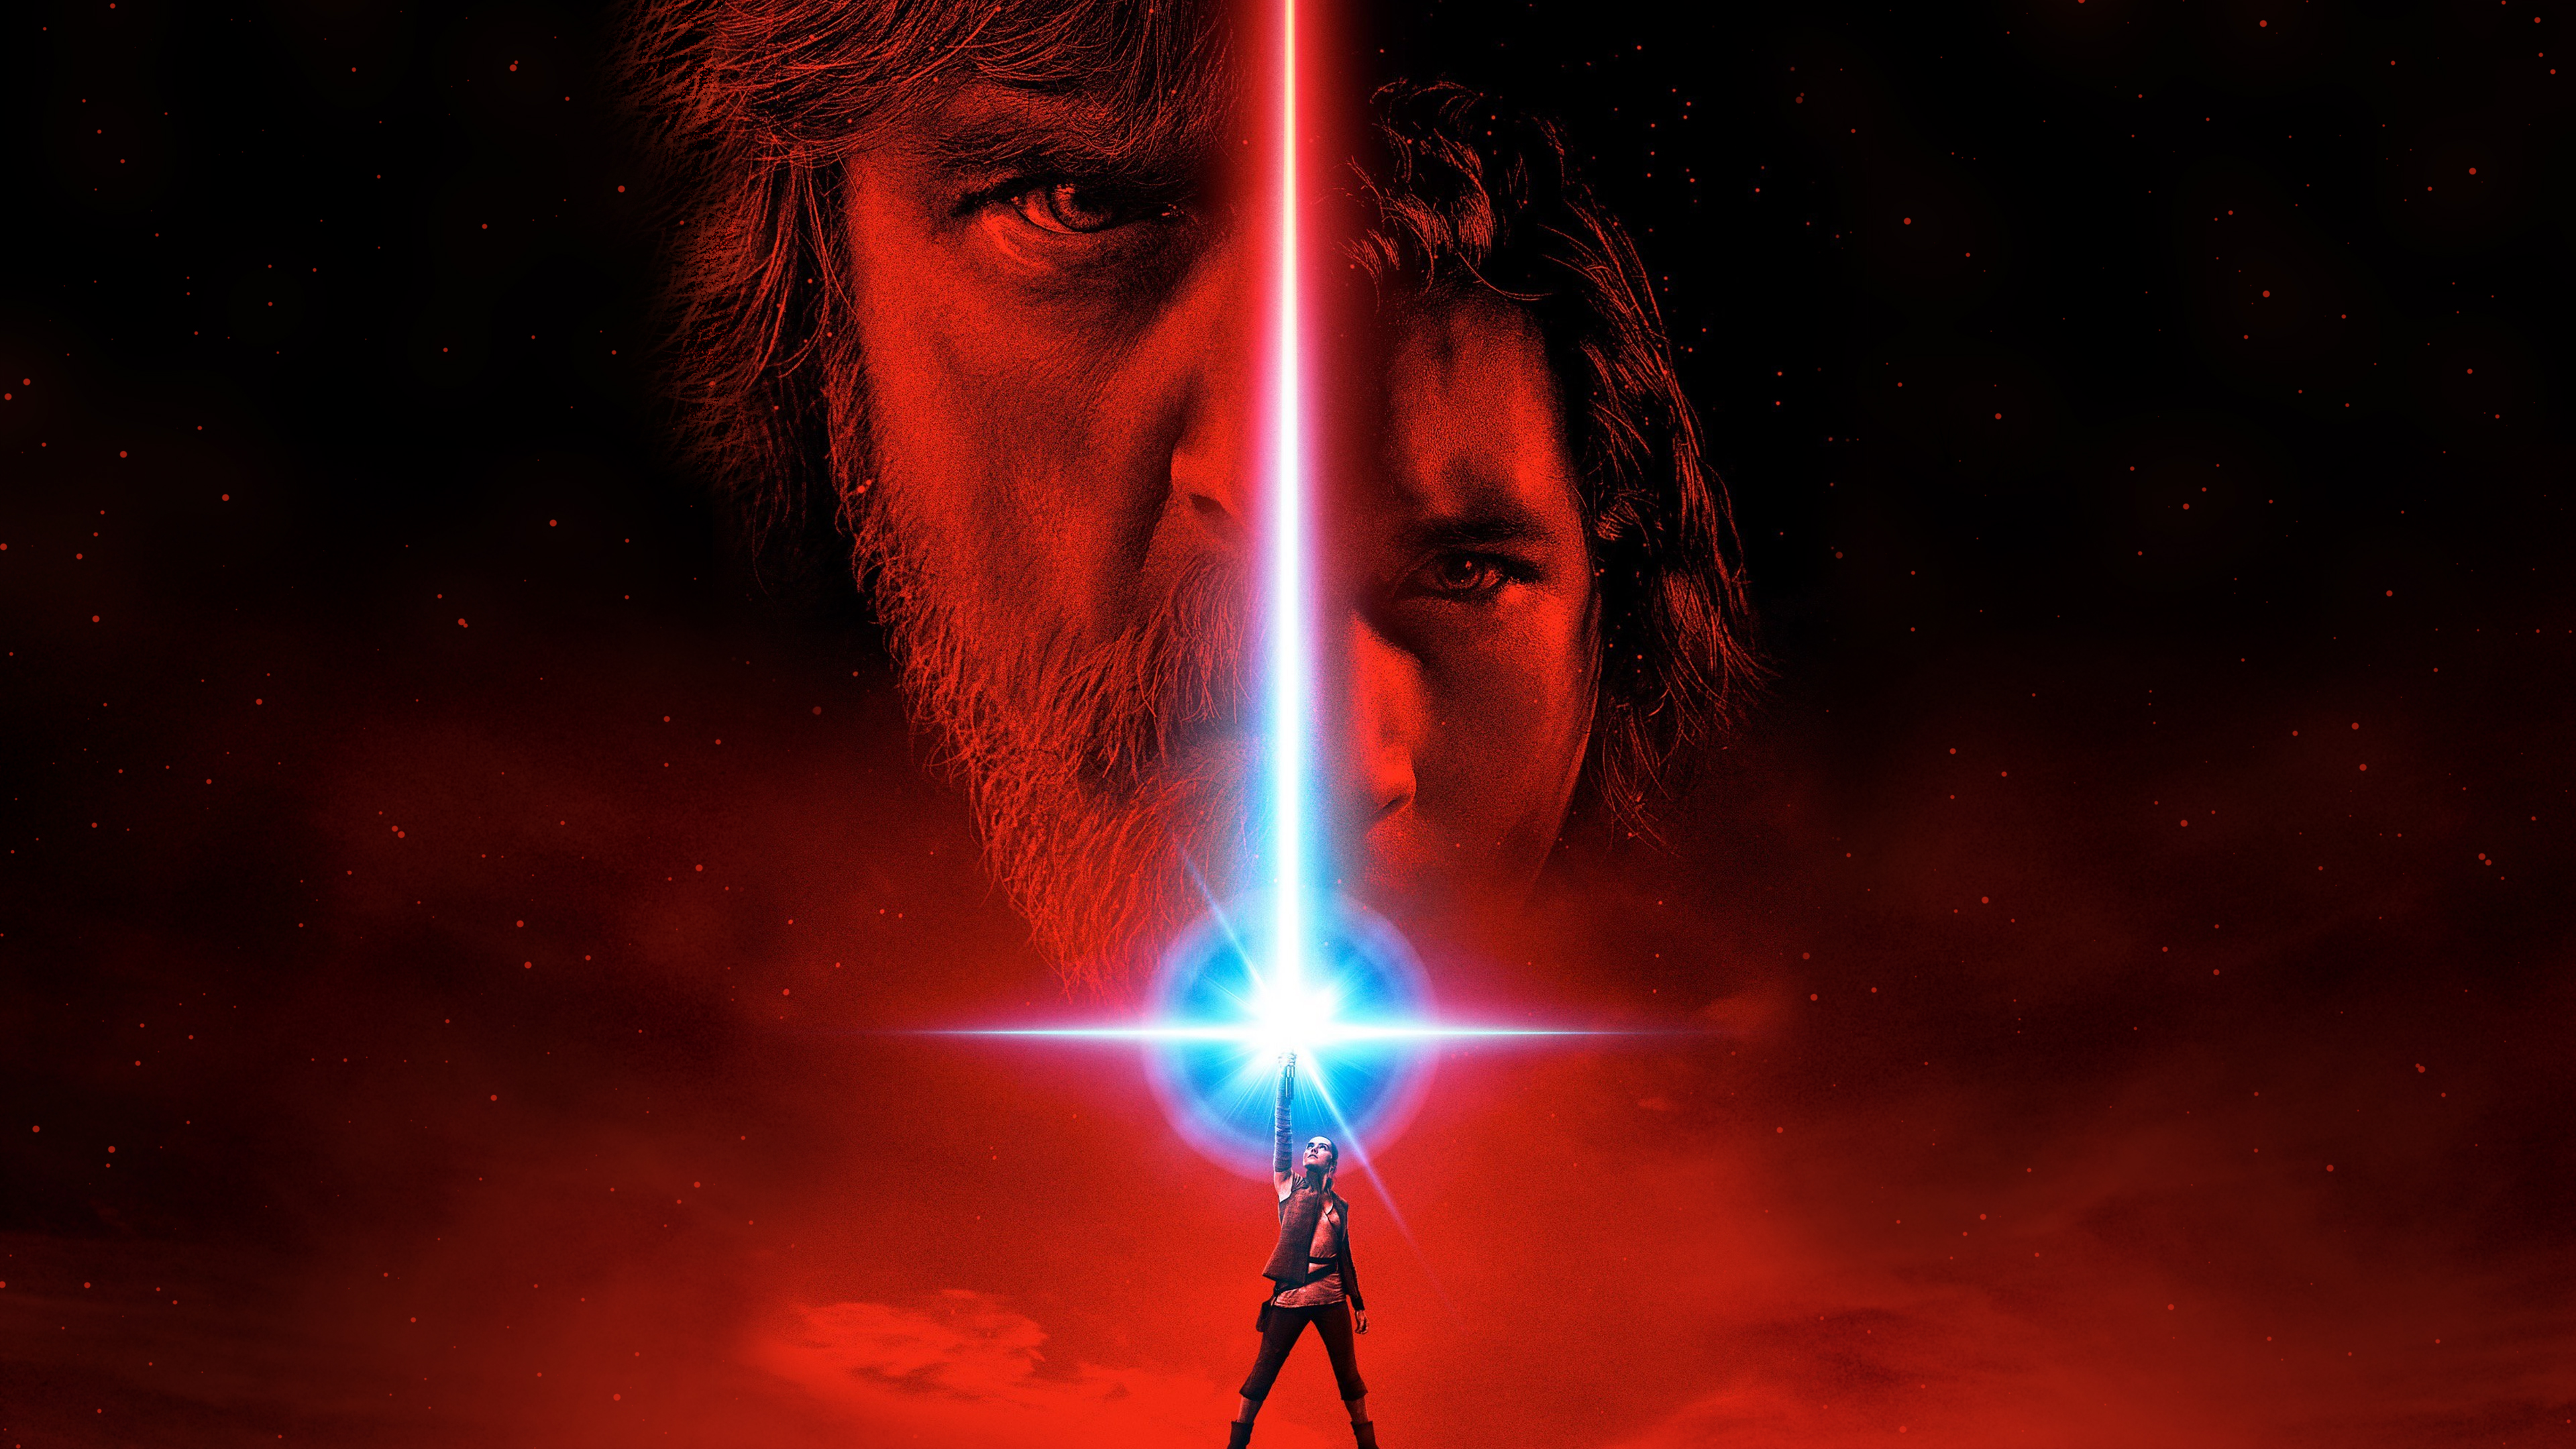 General 3840x2160 Star Wars Star Wars: The Last Jedi Luke Skywalker lightsaber movie poster Kylo Ren Star Wars Heroes Star Wars Villains red face